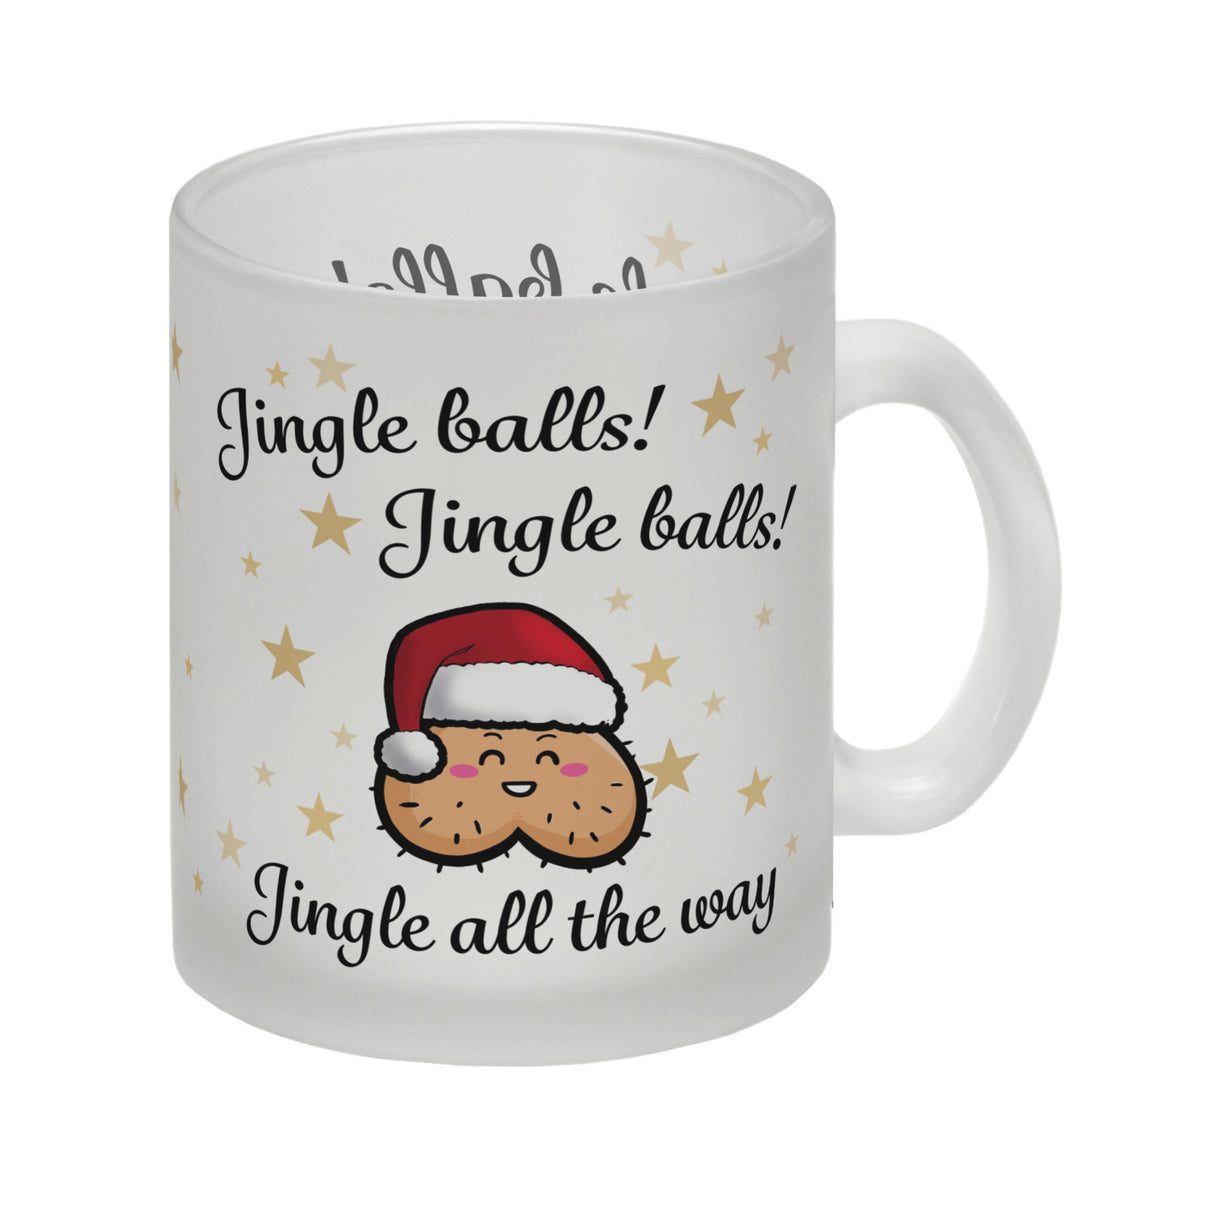 Weihnachts-Hoden Kaffeebecher mit Weihnachtssong Jingle balls